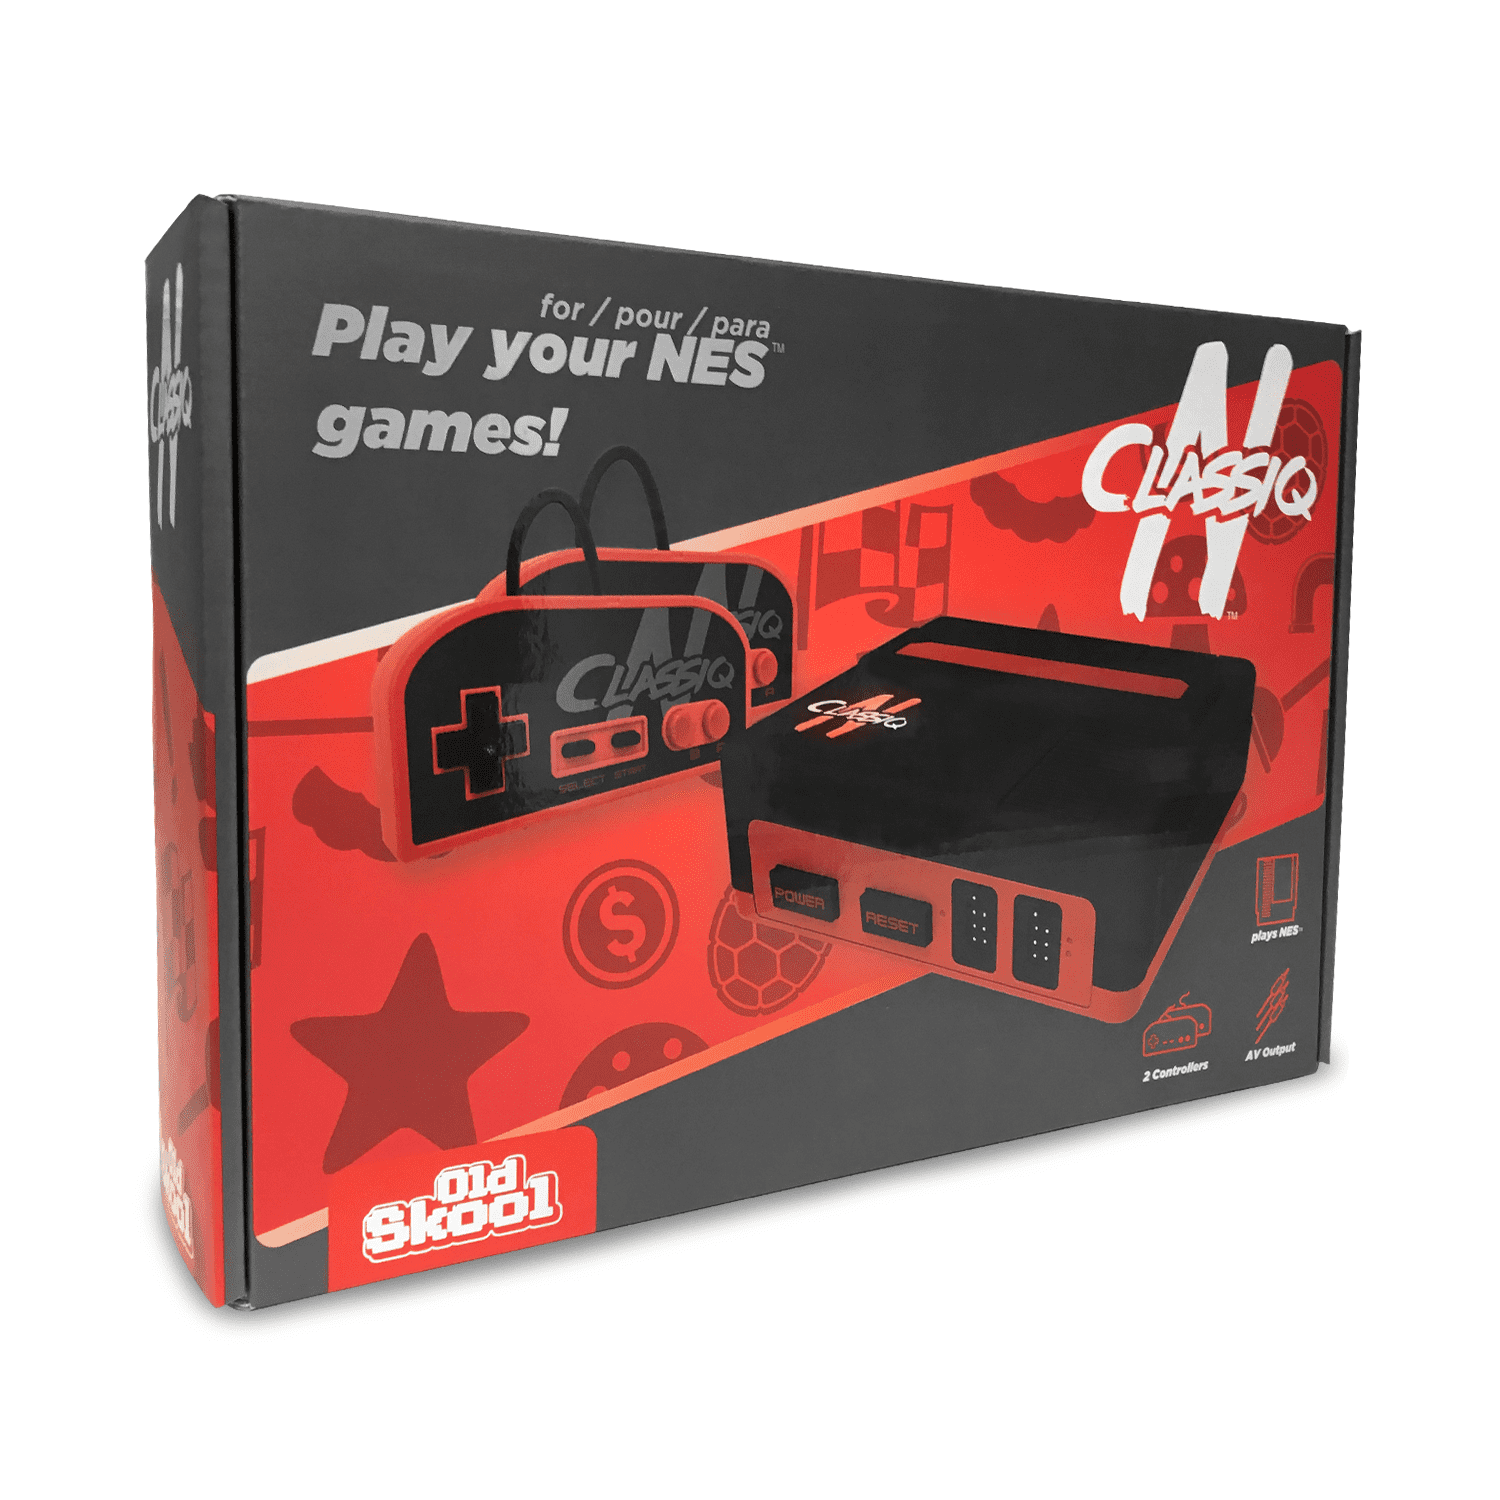 Old Skool CLASSIQ N Console Compatible with NES - Black/Red Clone 